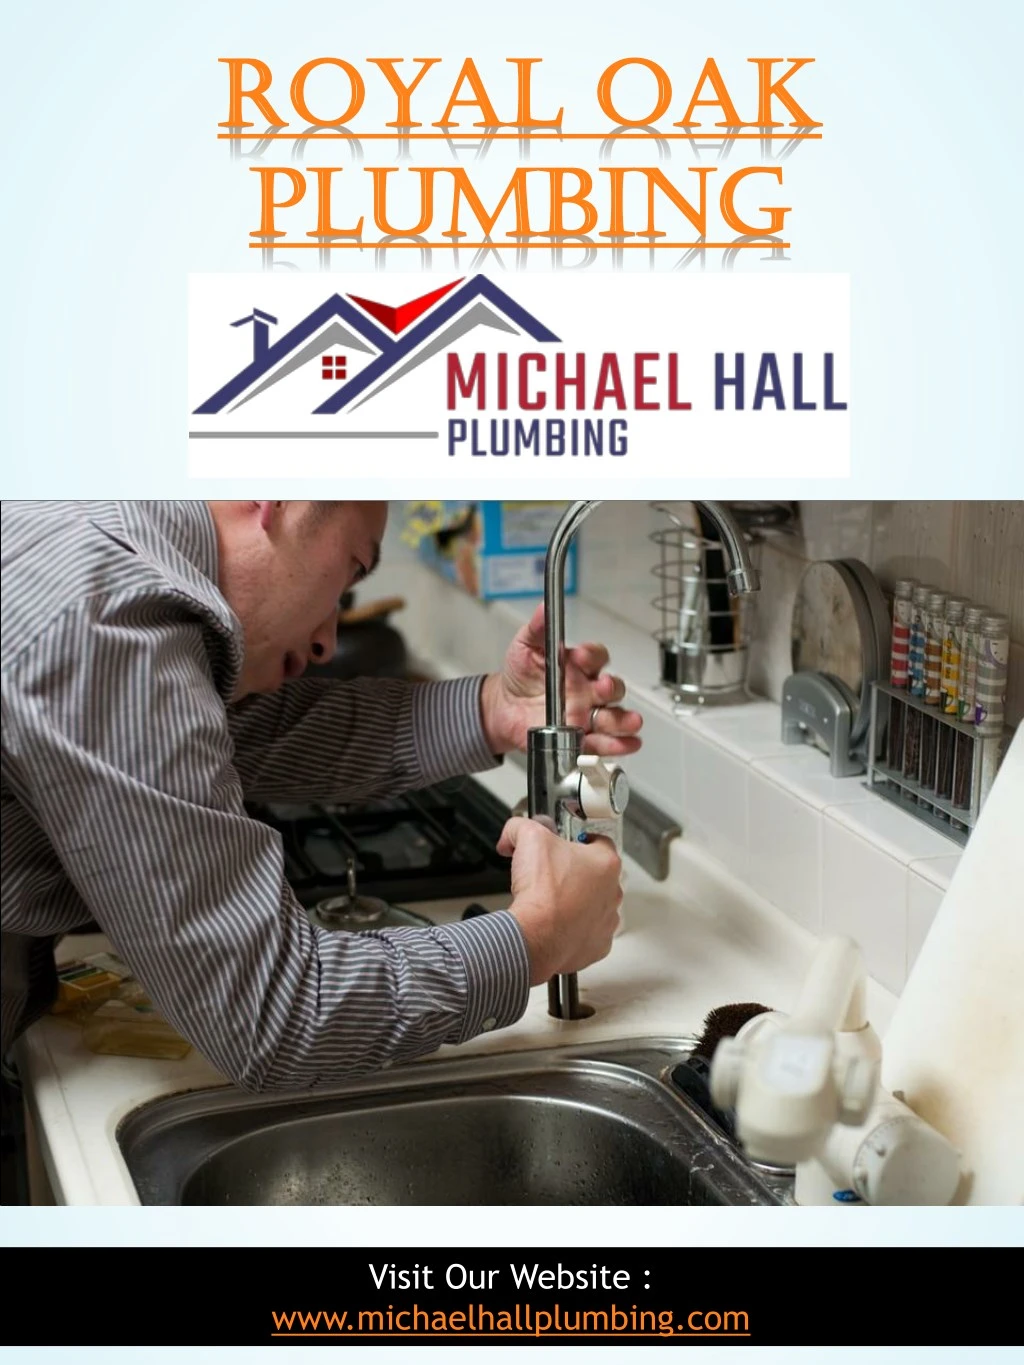 royal oak royal oak plumbing plumbing